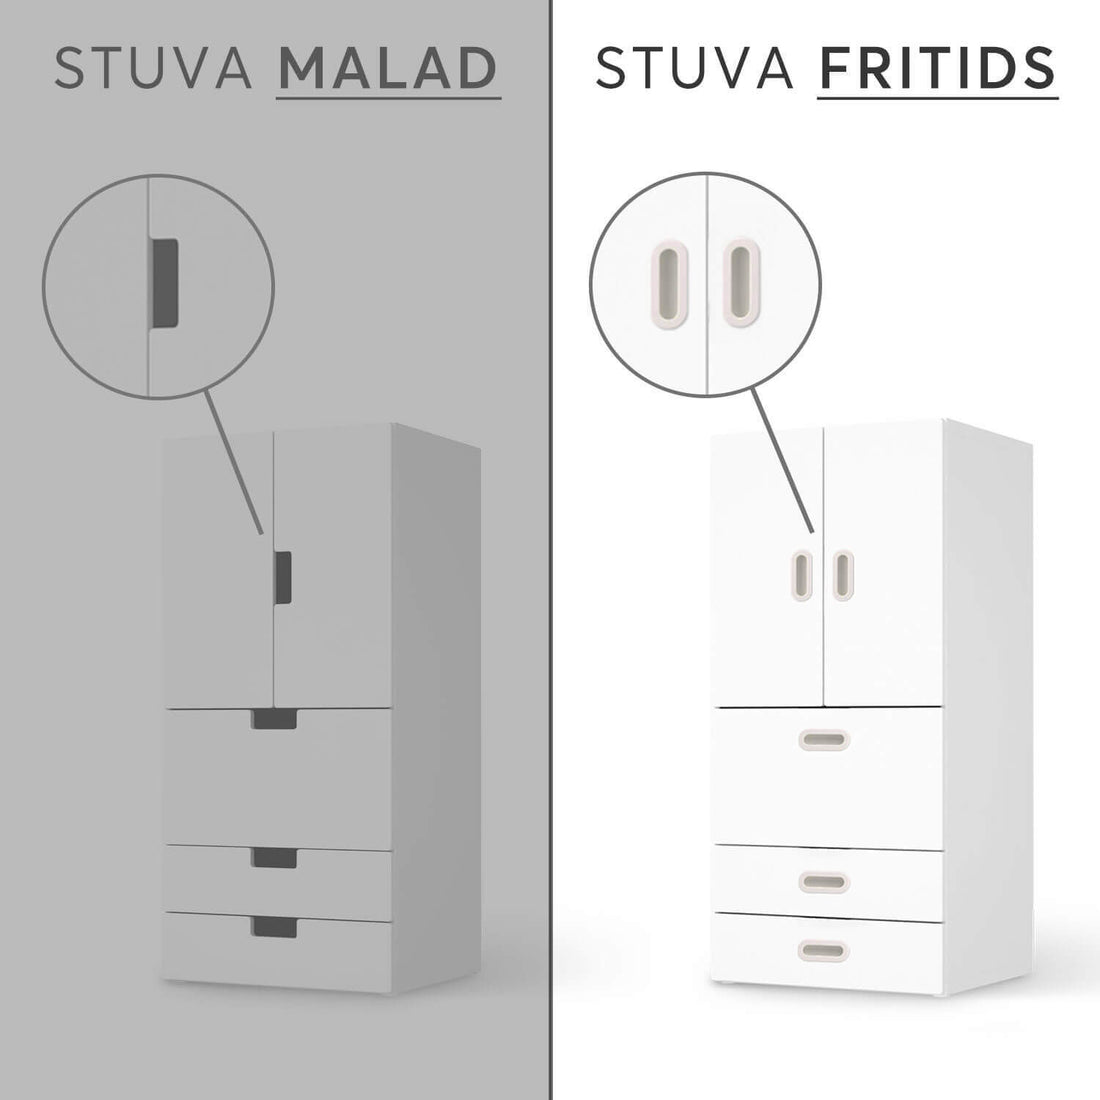 Vergleich IKEA Stuva Fritids / Malad - Artwood